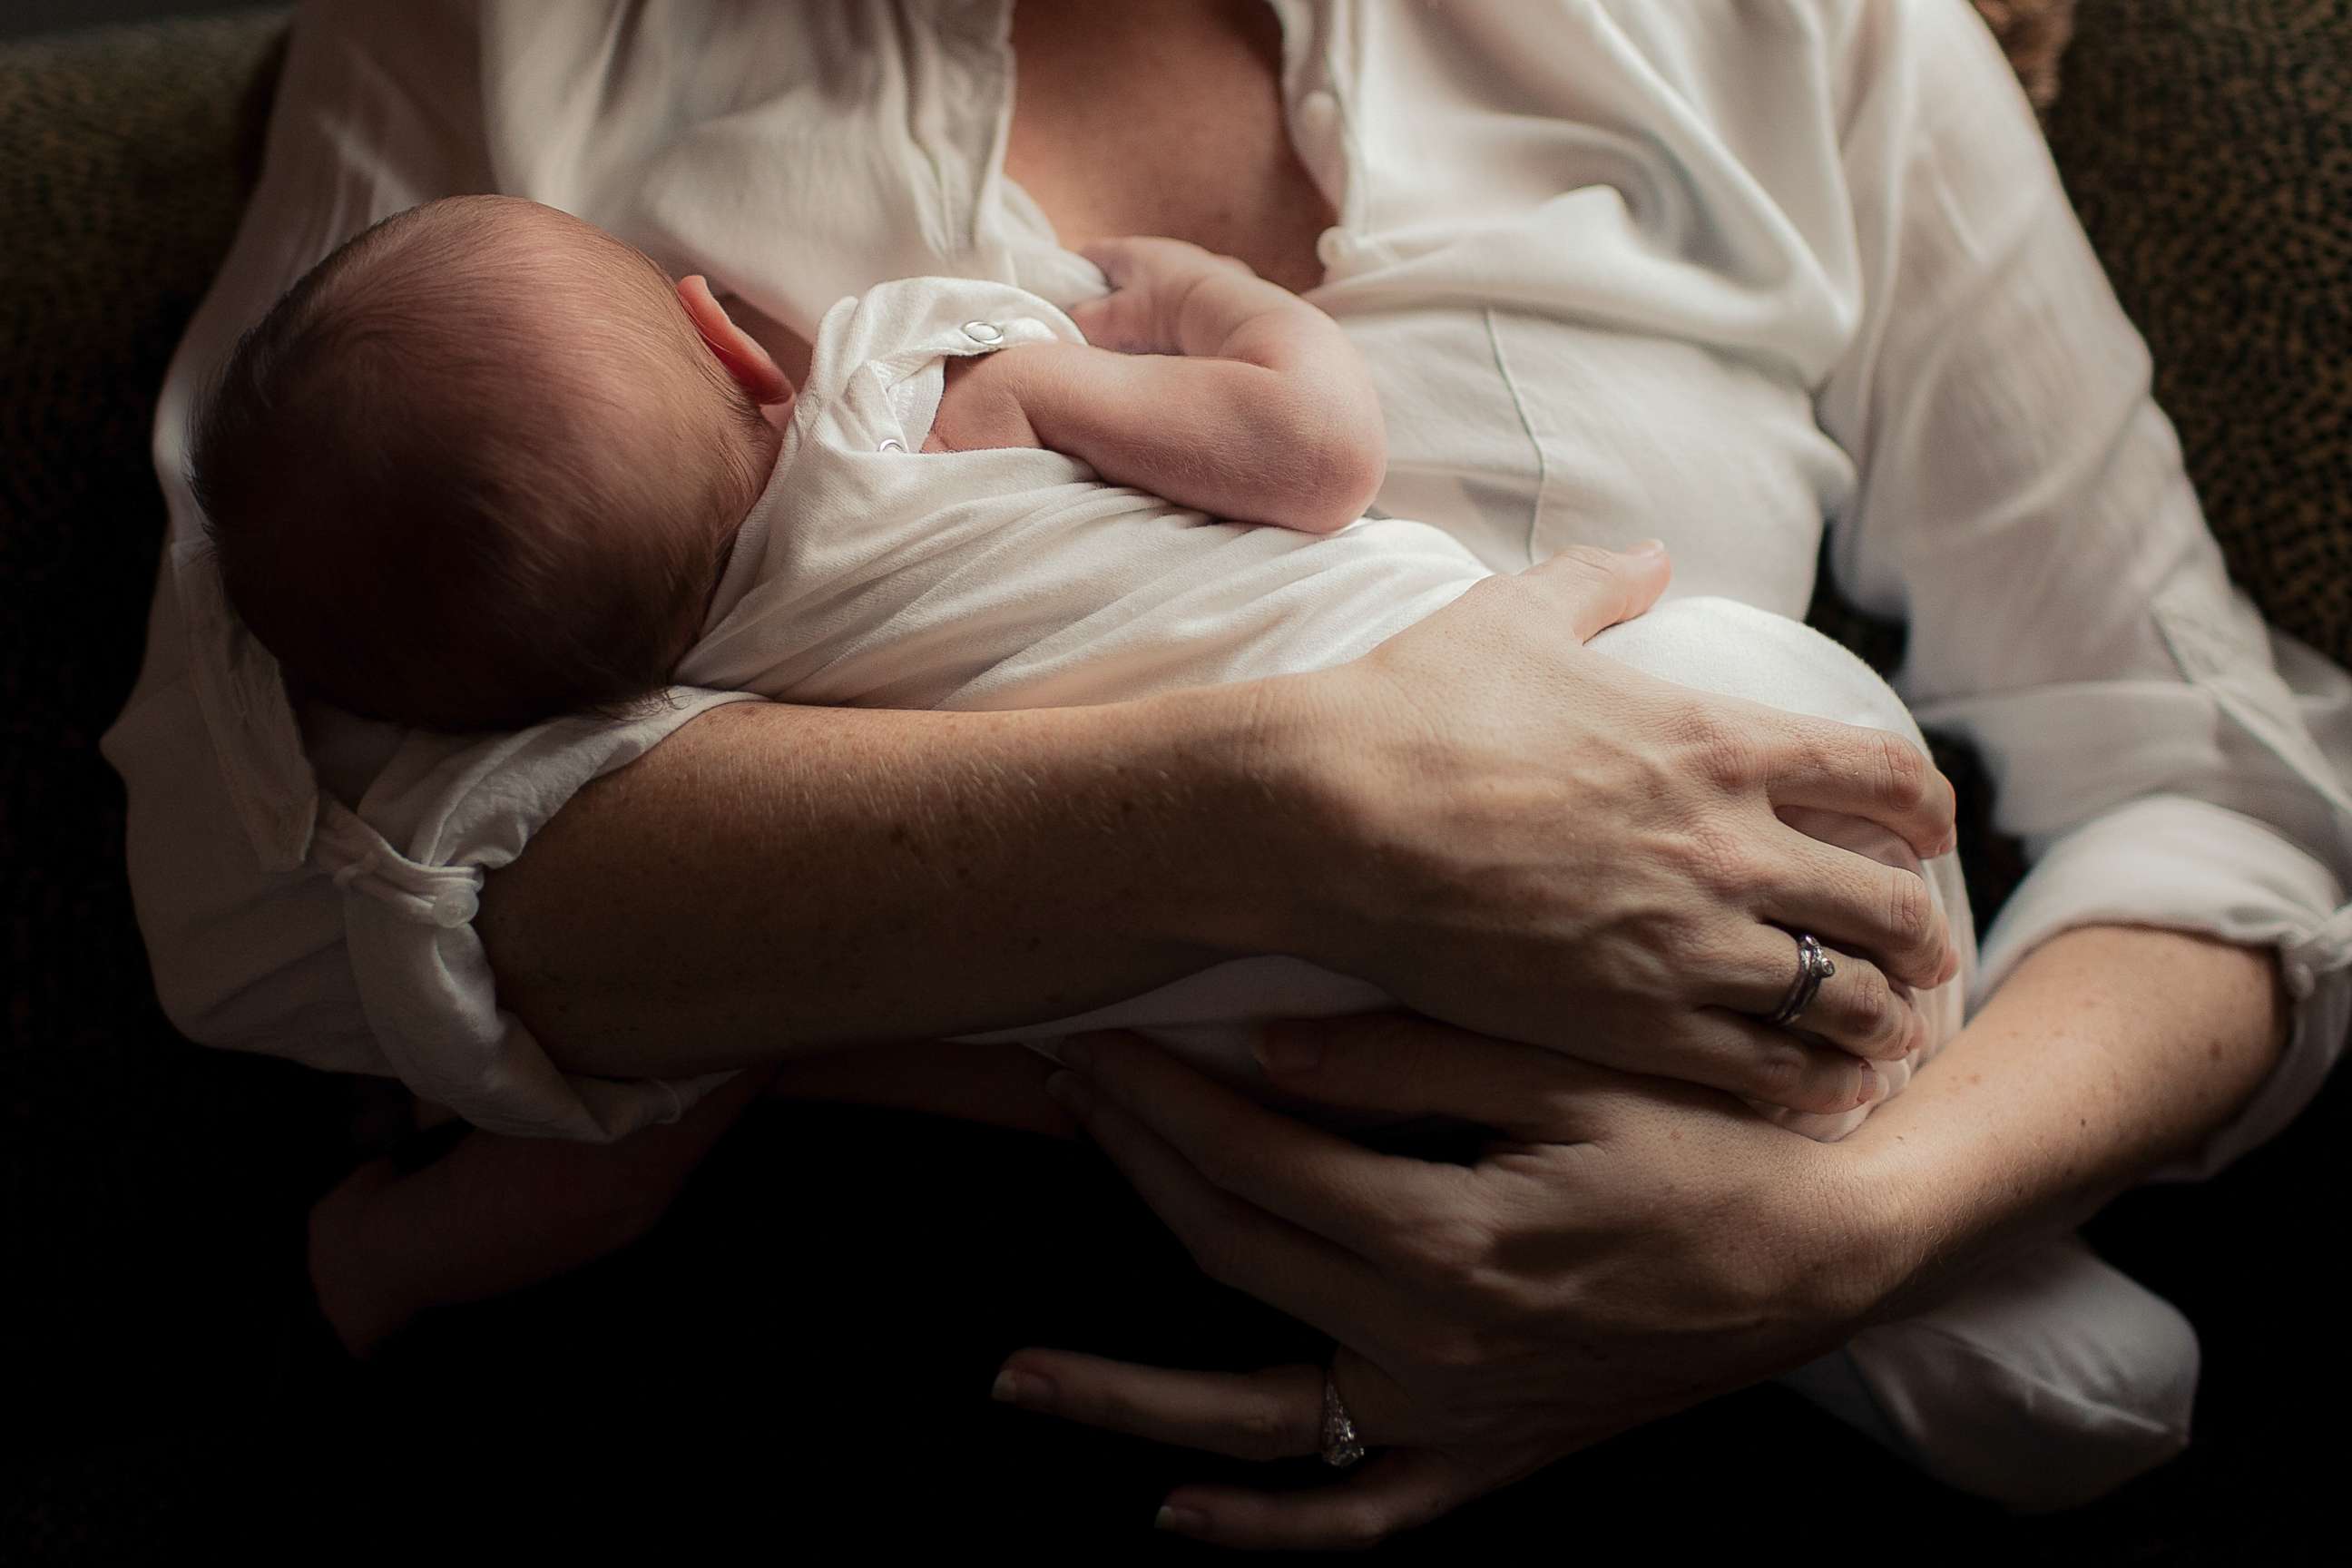 https://s.abcnews.com/images/Health/GTY-Breast-Feeding3-MEM-161219_hpMain_2.jpg